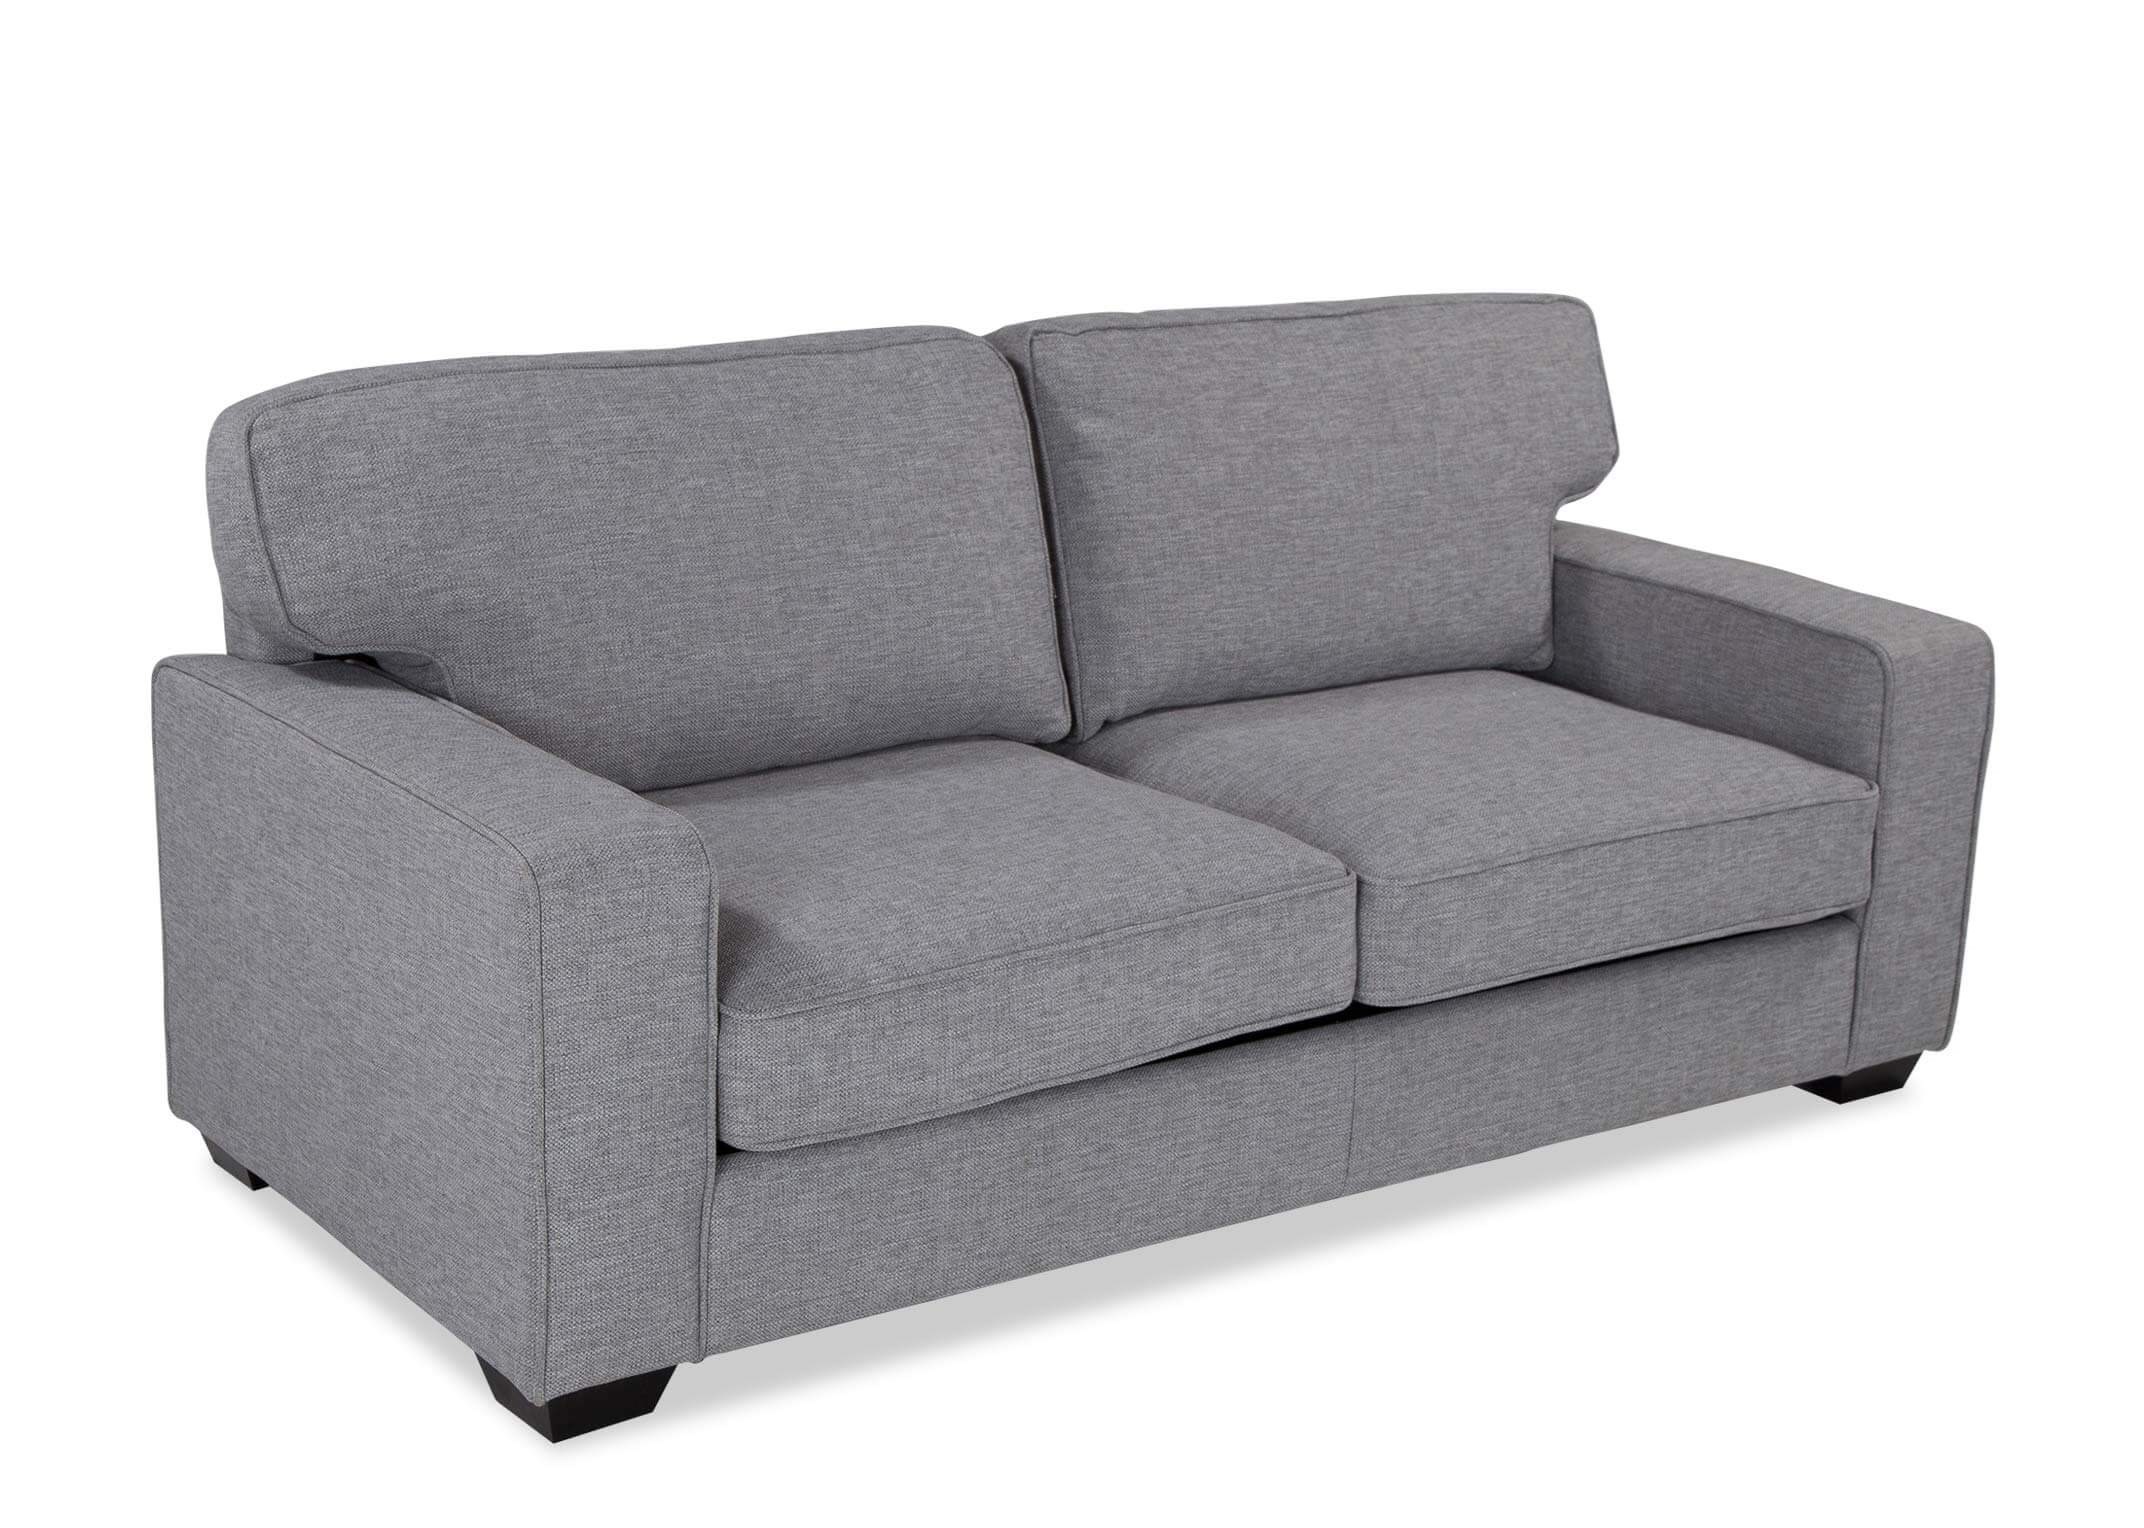 Grey Fabric Sofa Bed Nevada Ez